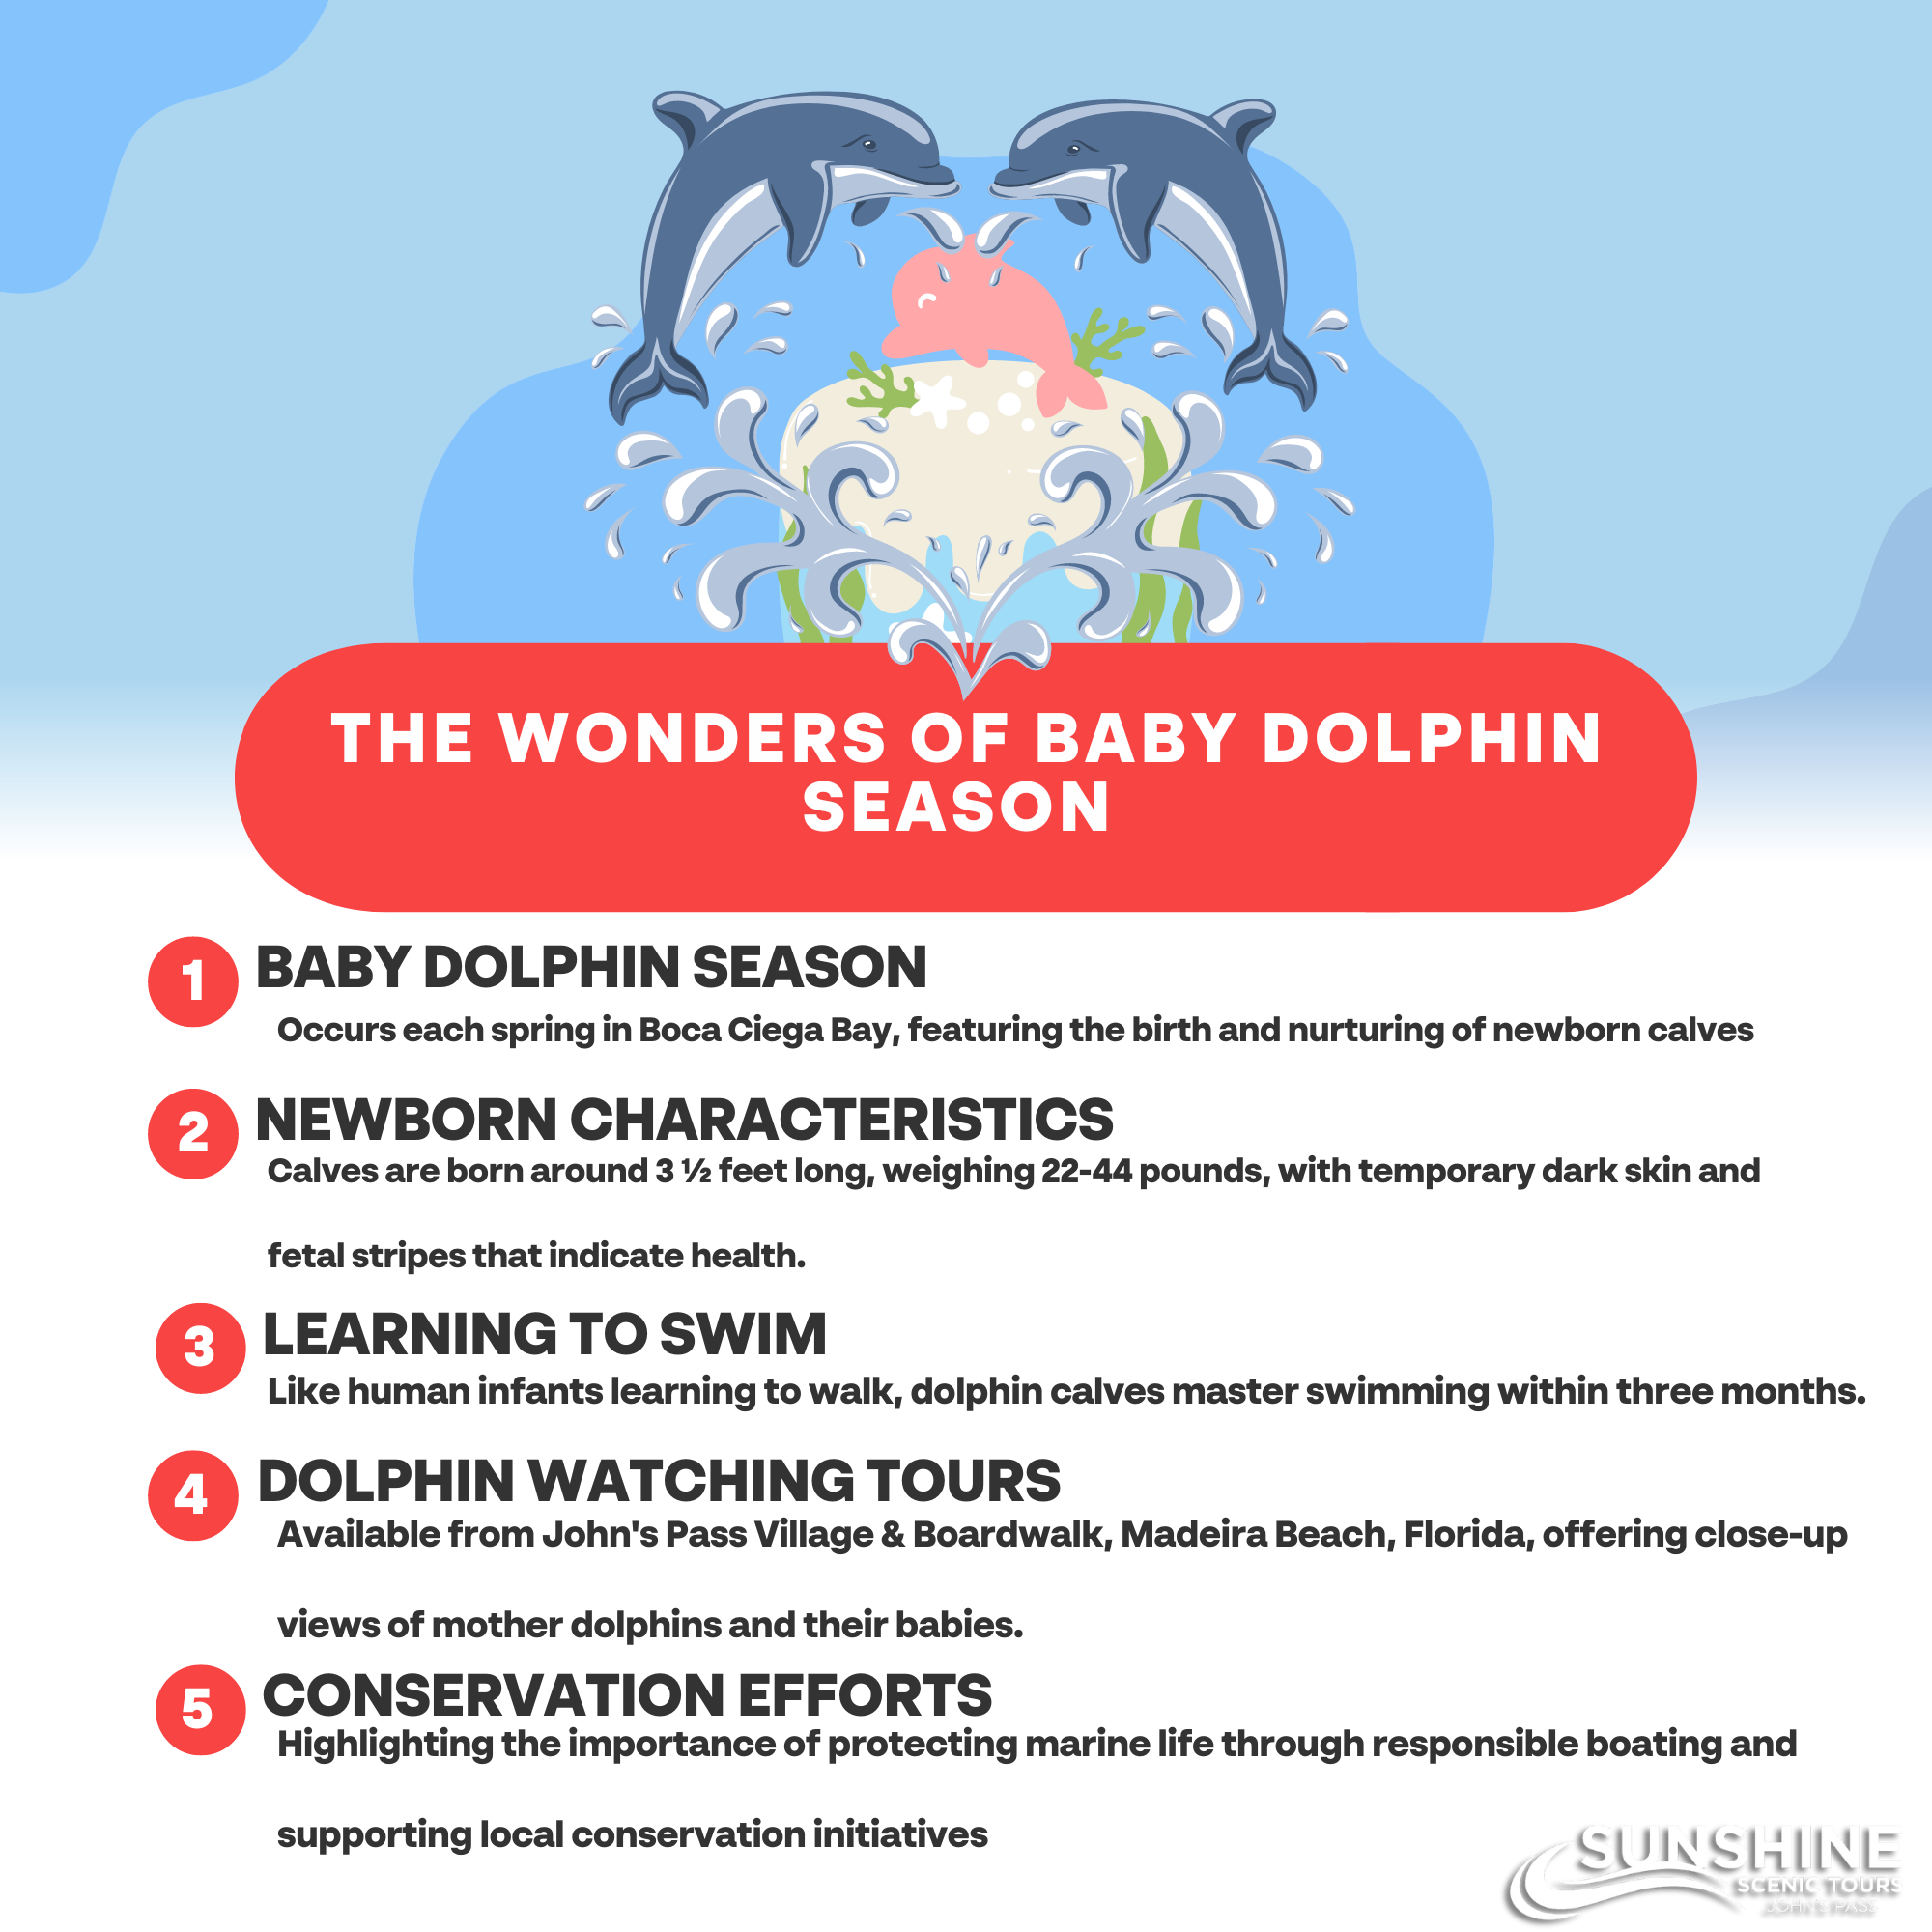 Discover the Wonders of Baby Dolphin Season in Boca Ciega Bay